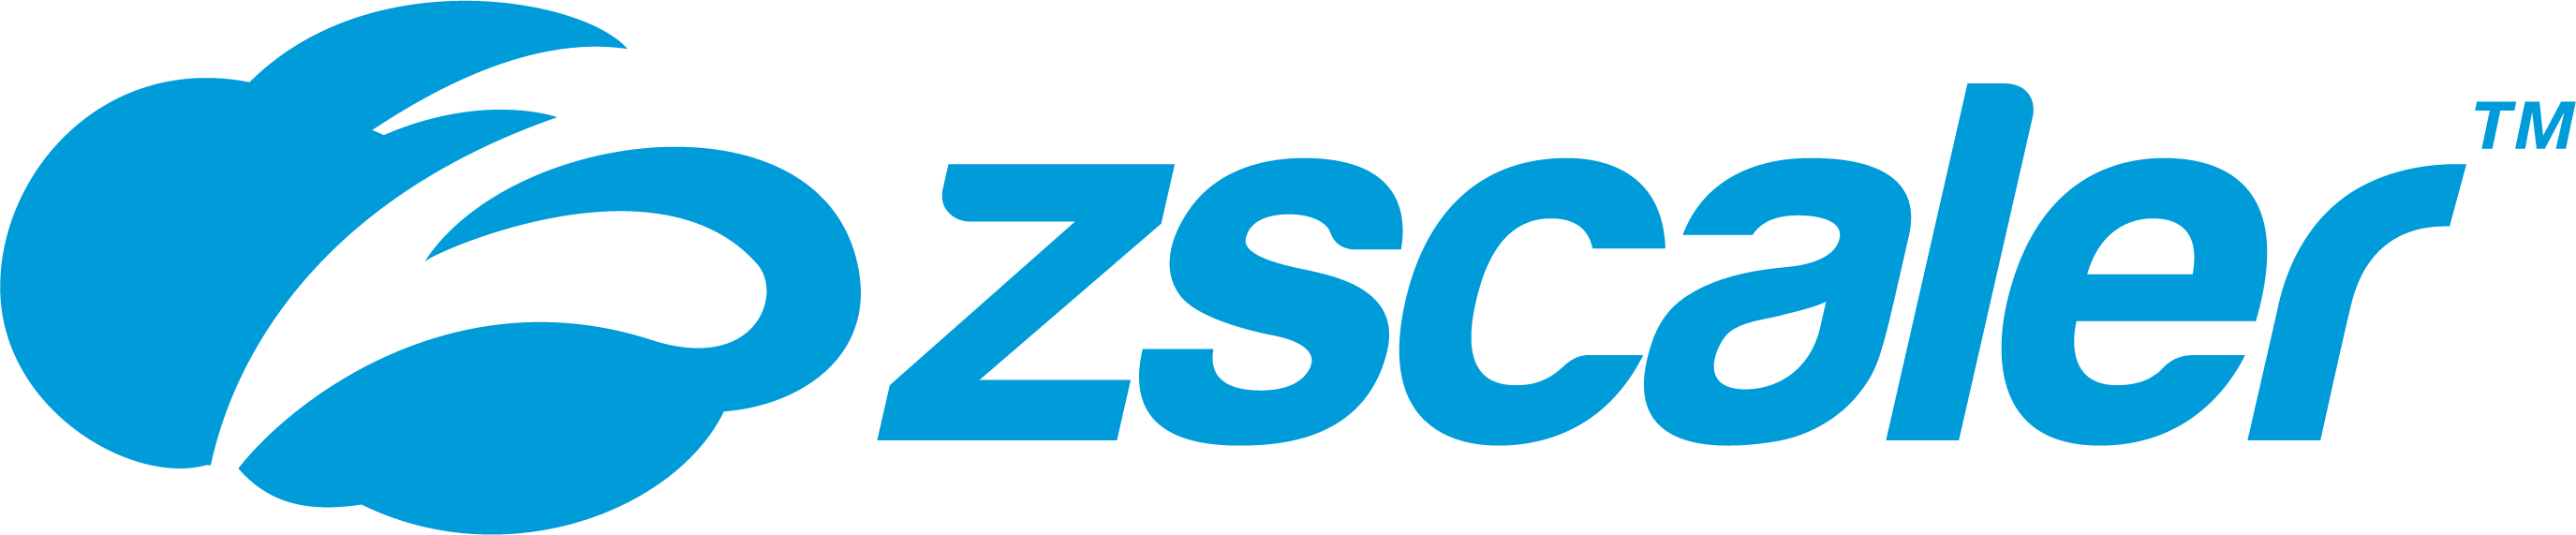 zscaler-logo-horizontal-blue-rgb-may2019.png